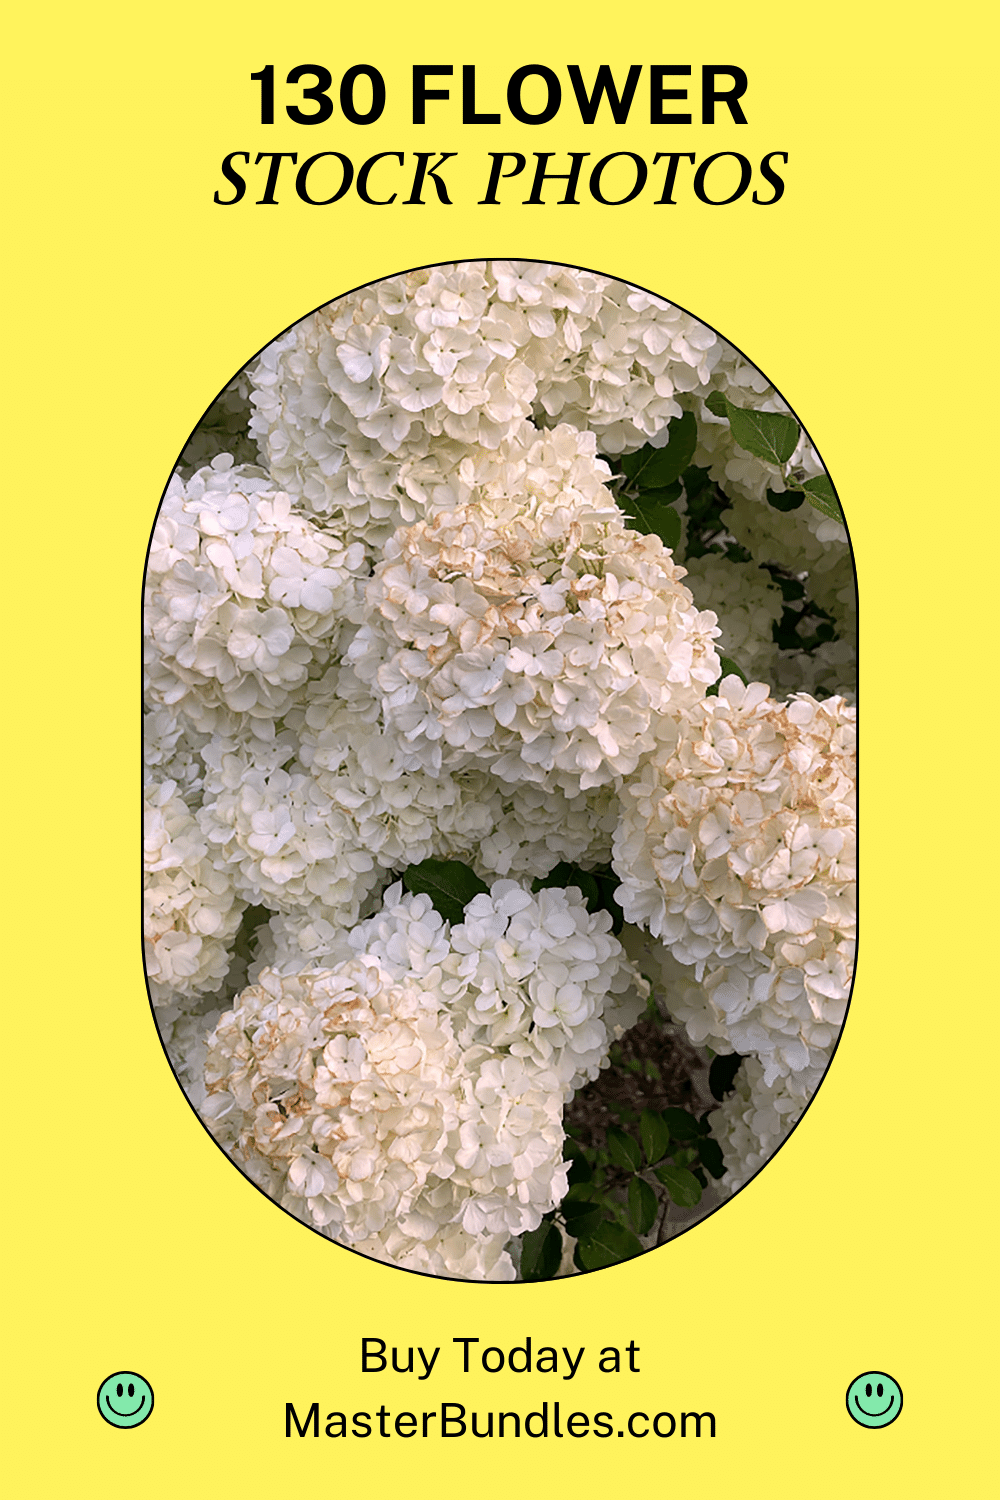 130 Beautiful Stock Photos Of Flowers Pinterest Image.